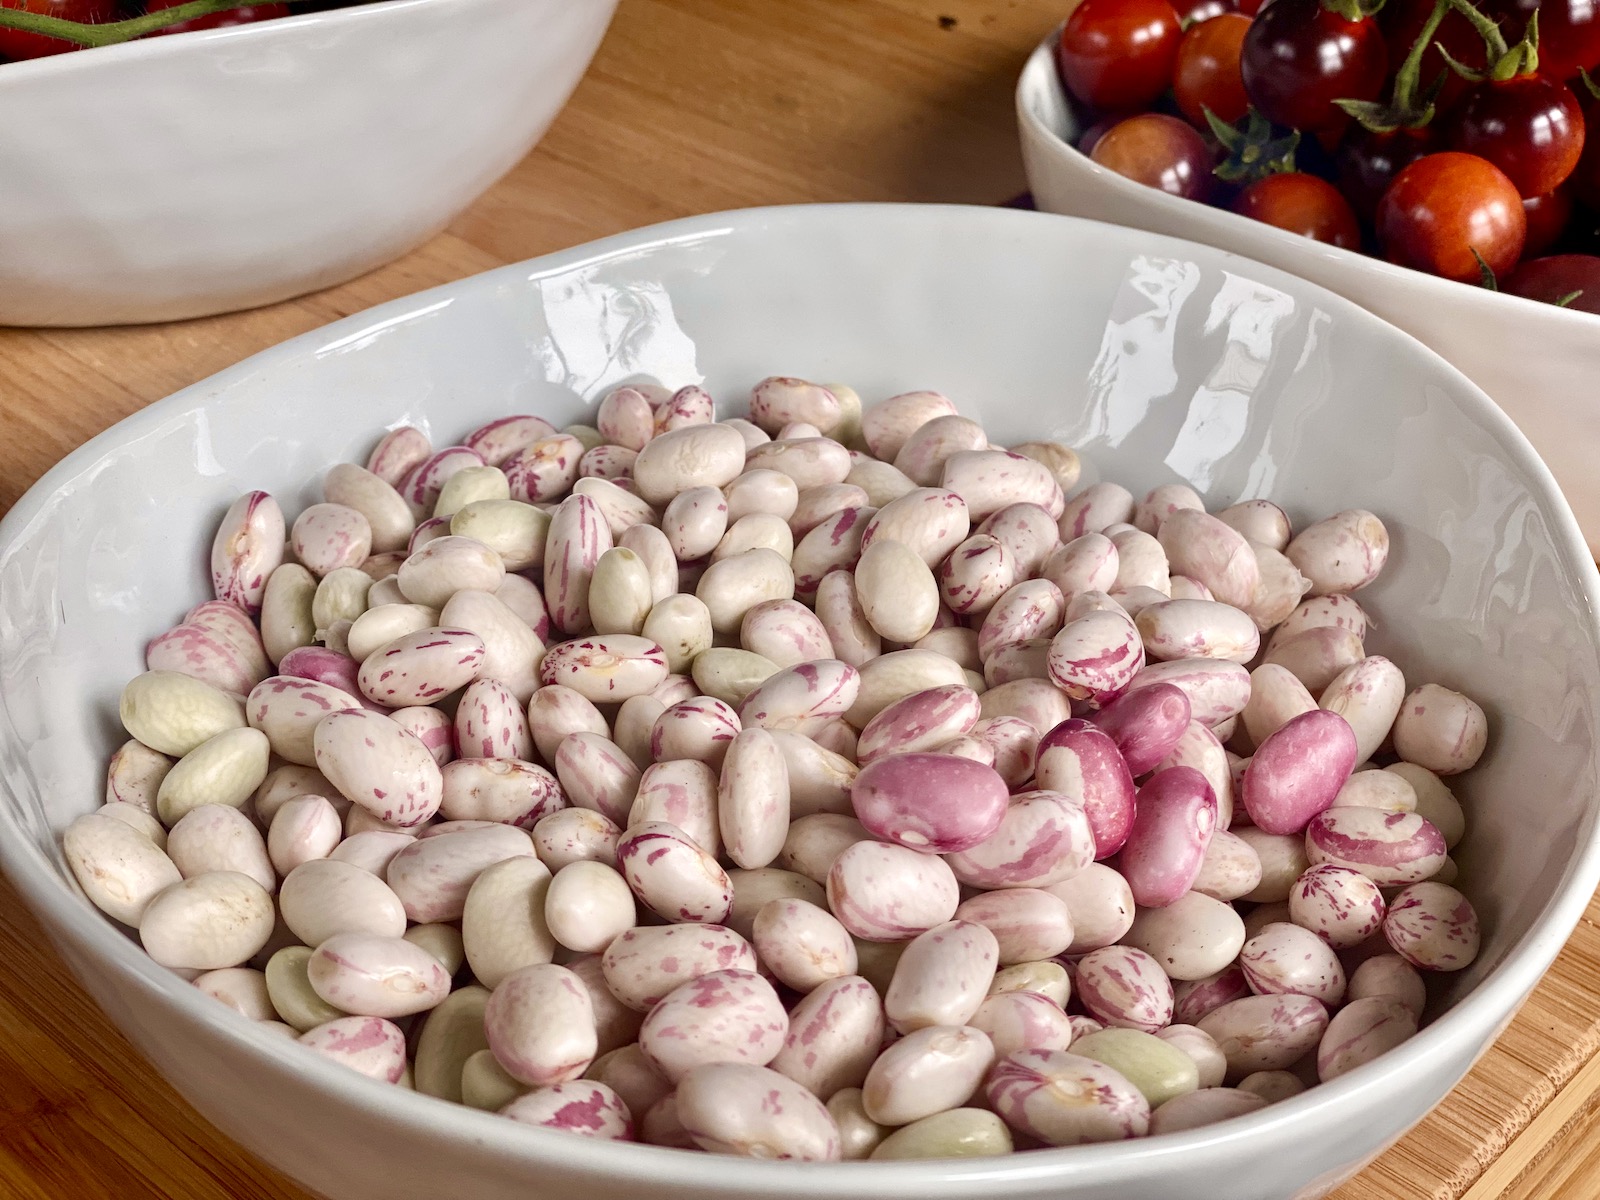 Shelling beans